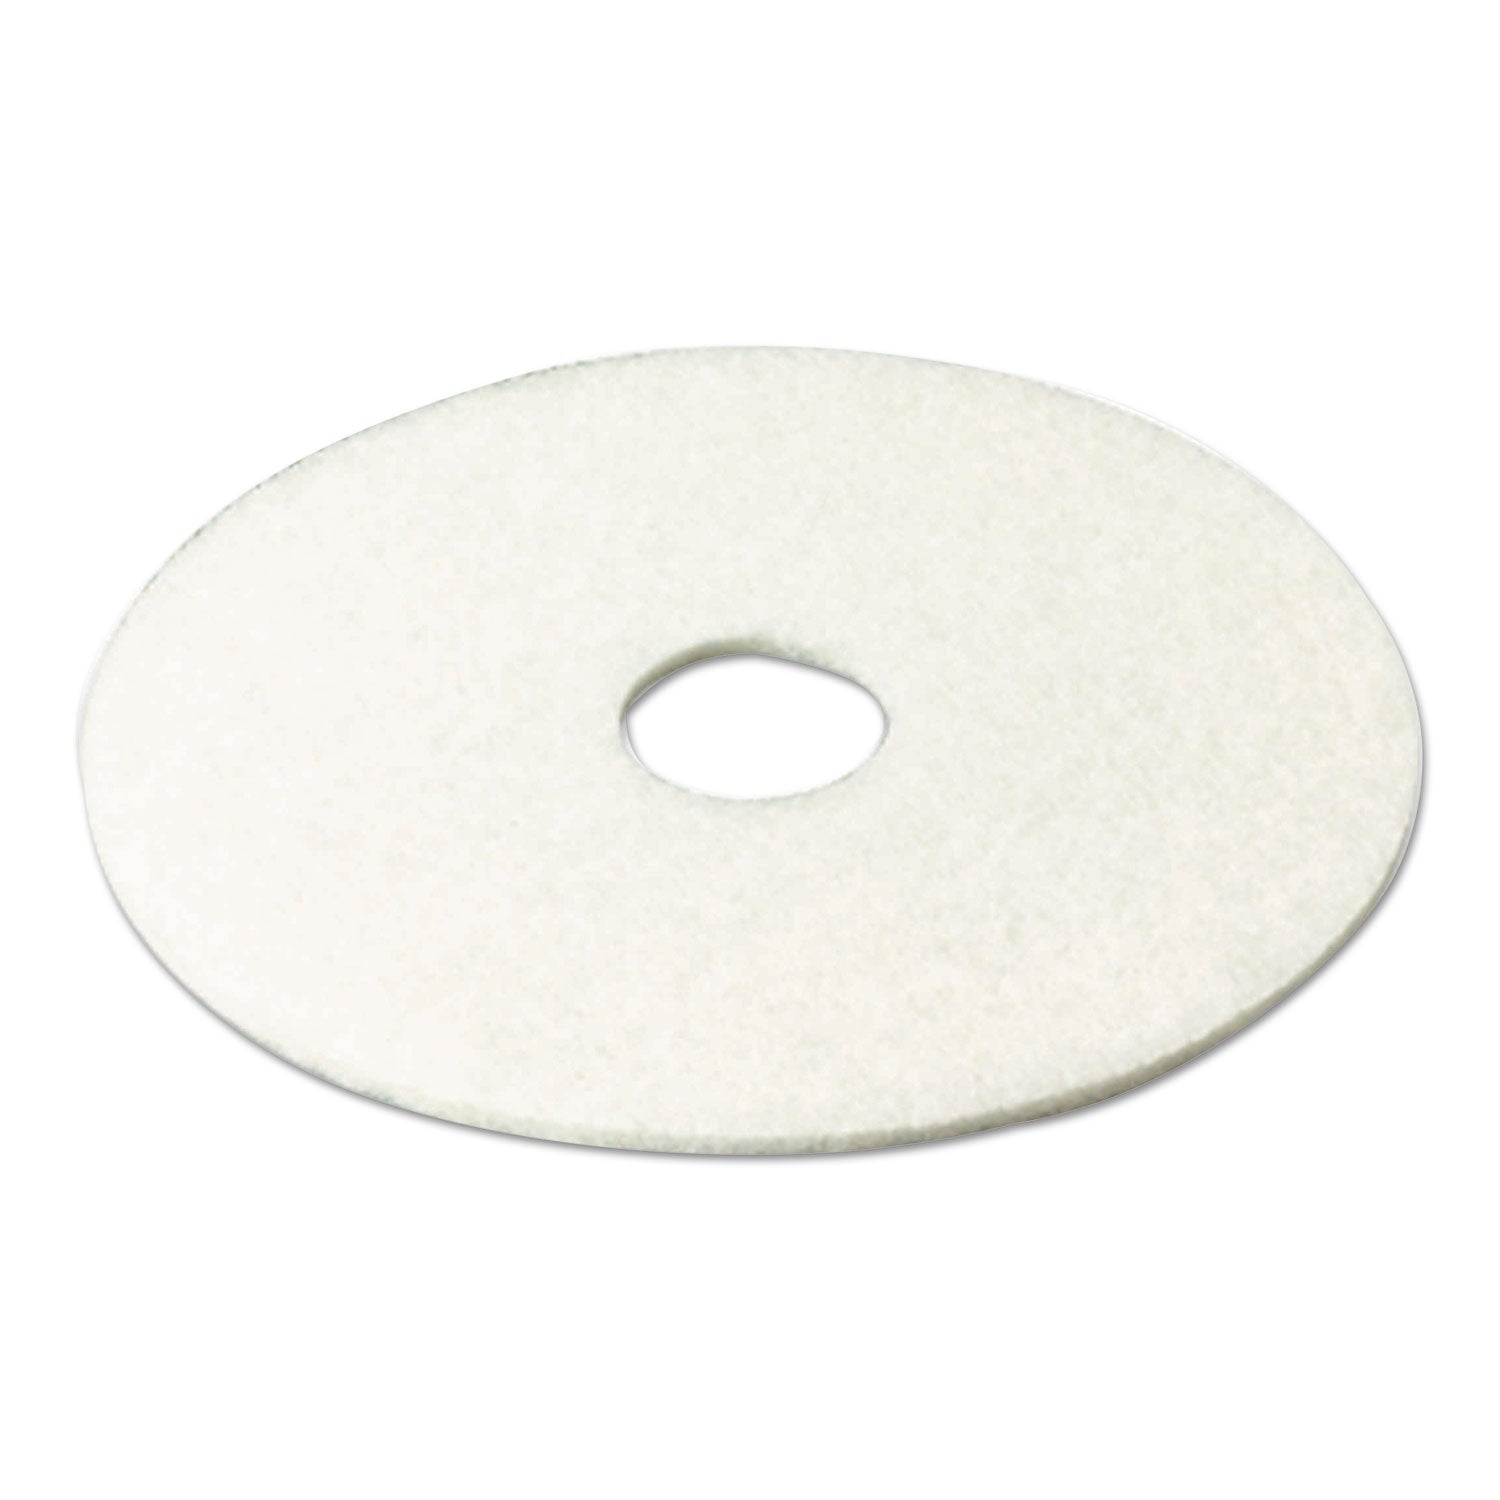 Low-Speed Super Polishing Floor Pads 4100, 17" Diameter, White, 5/Carton - 